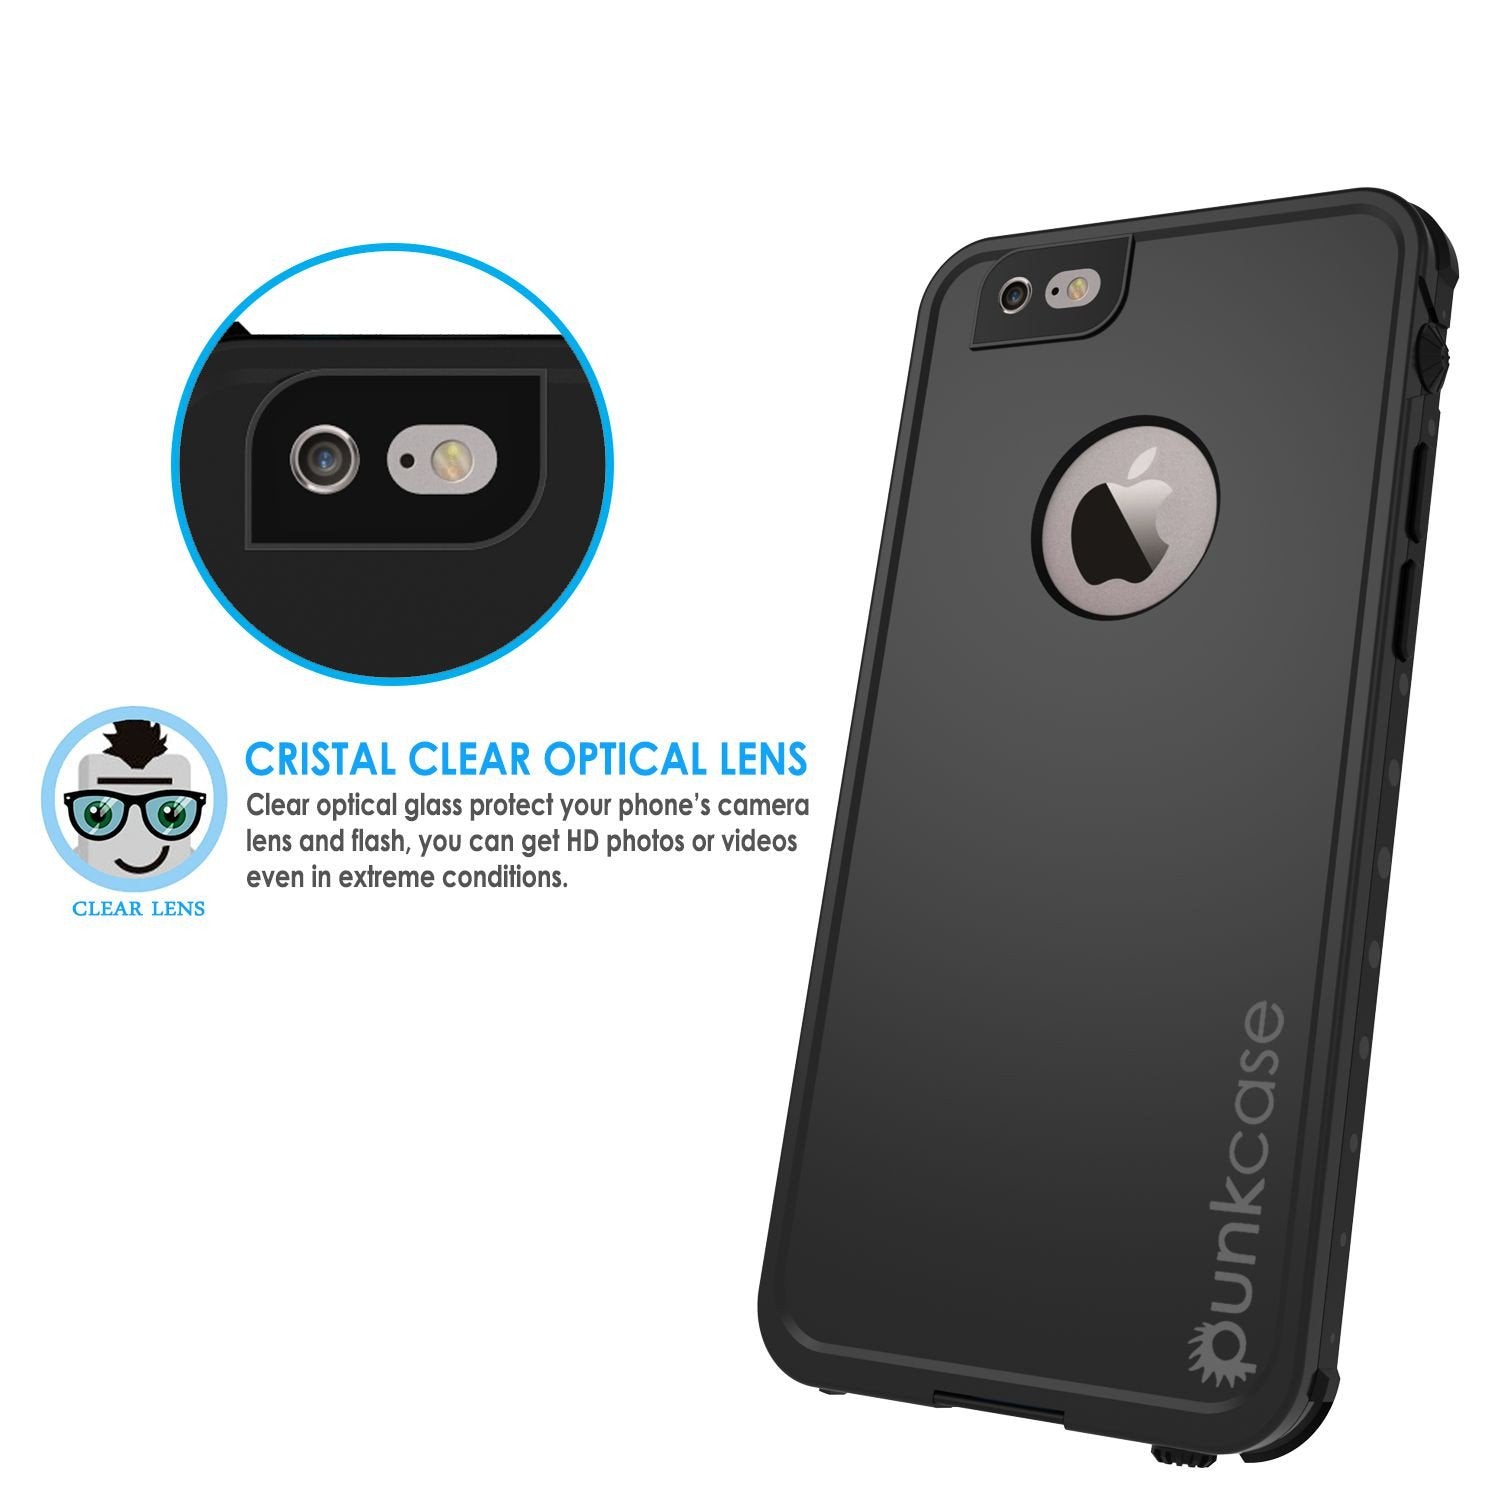 iPhone 6s/6 Waterproof Case PunkCase StudStar Black w/ Attached Screen Protector | Lifetime Warranty - PunkCase NZ